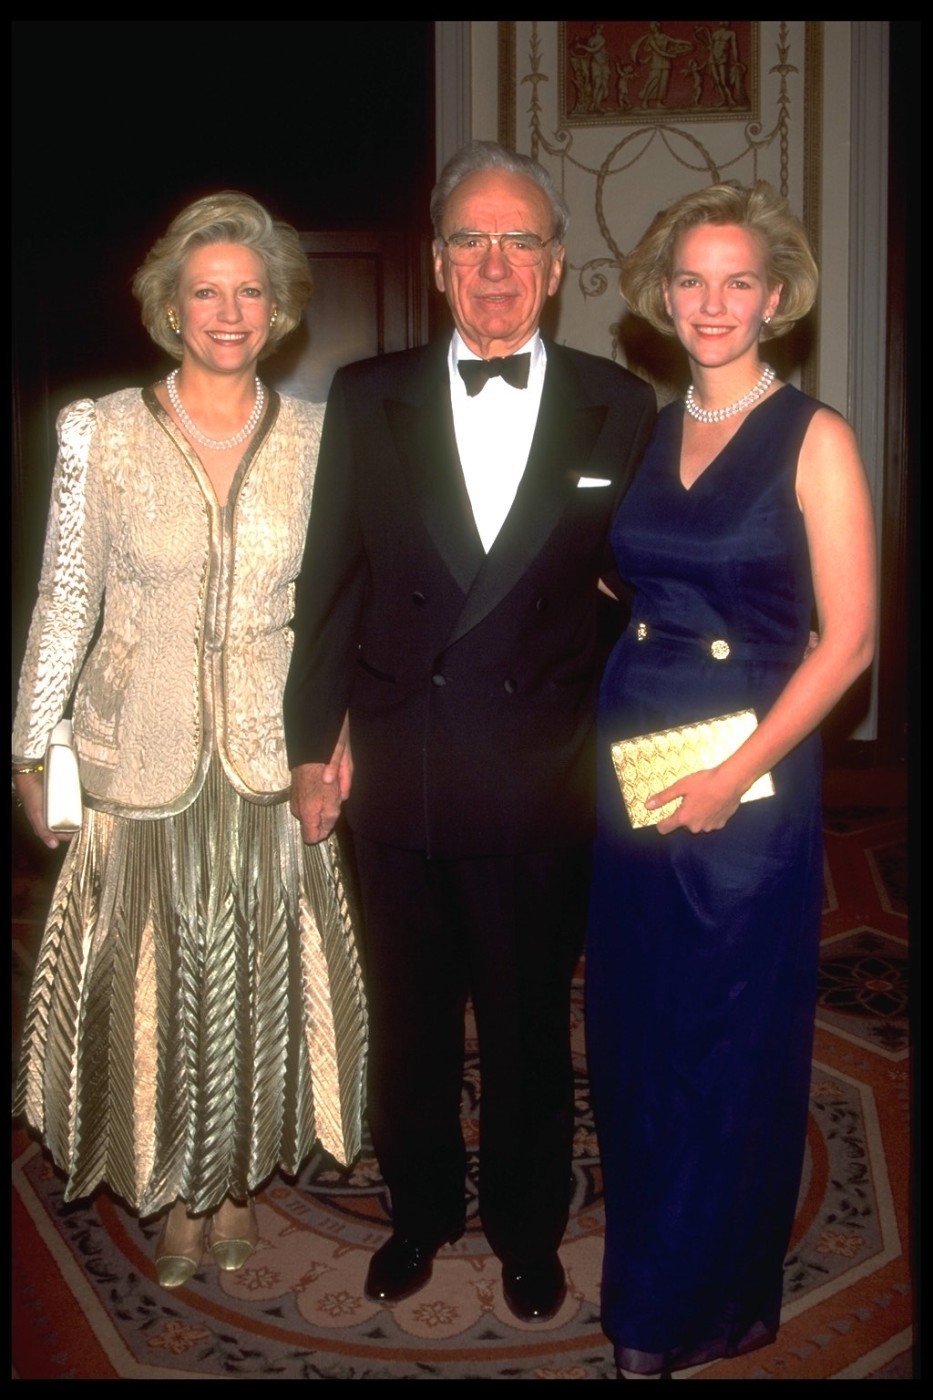 Tiskový magnát Ruppert Murdoch s bývalou manželkou Annou (vlevo) a dcerou